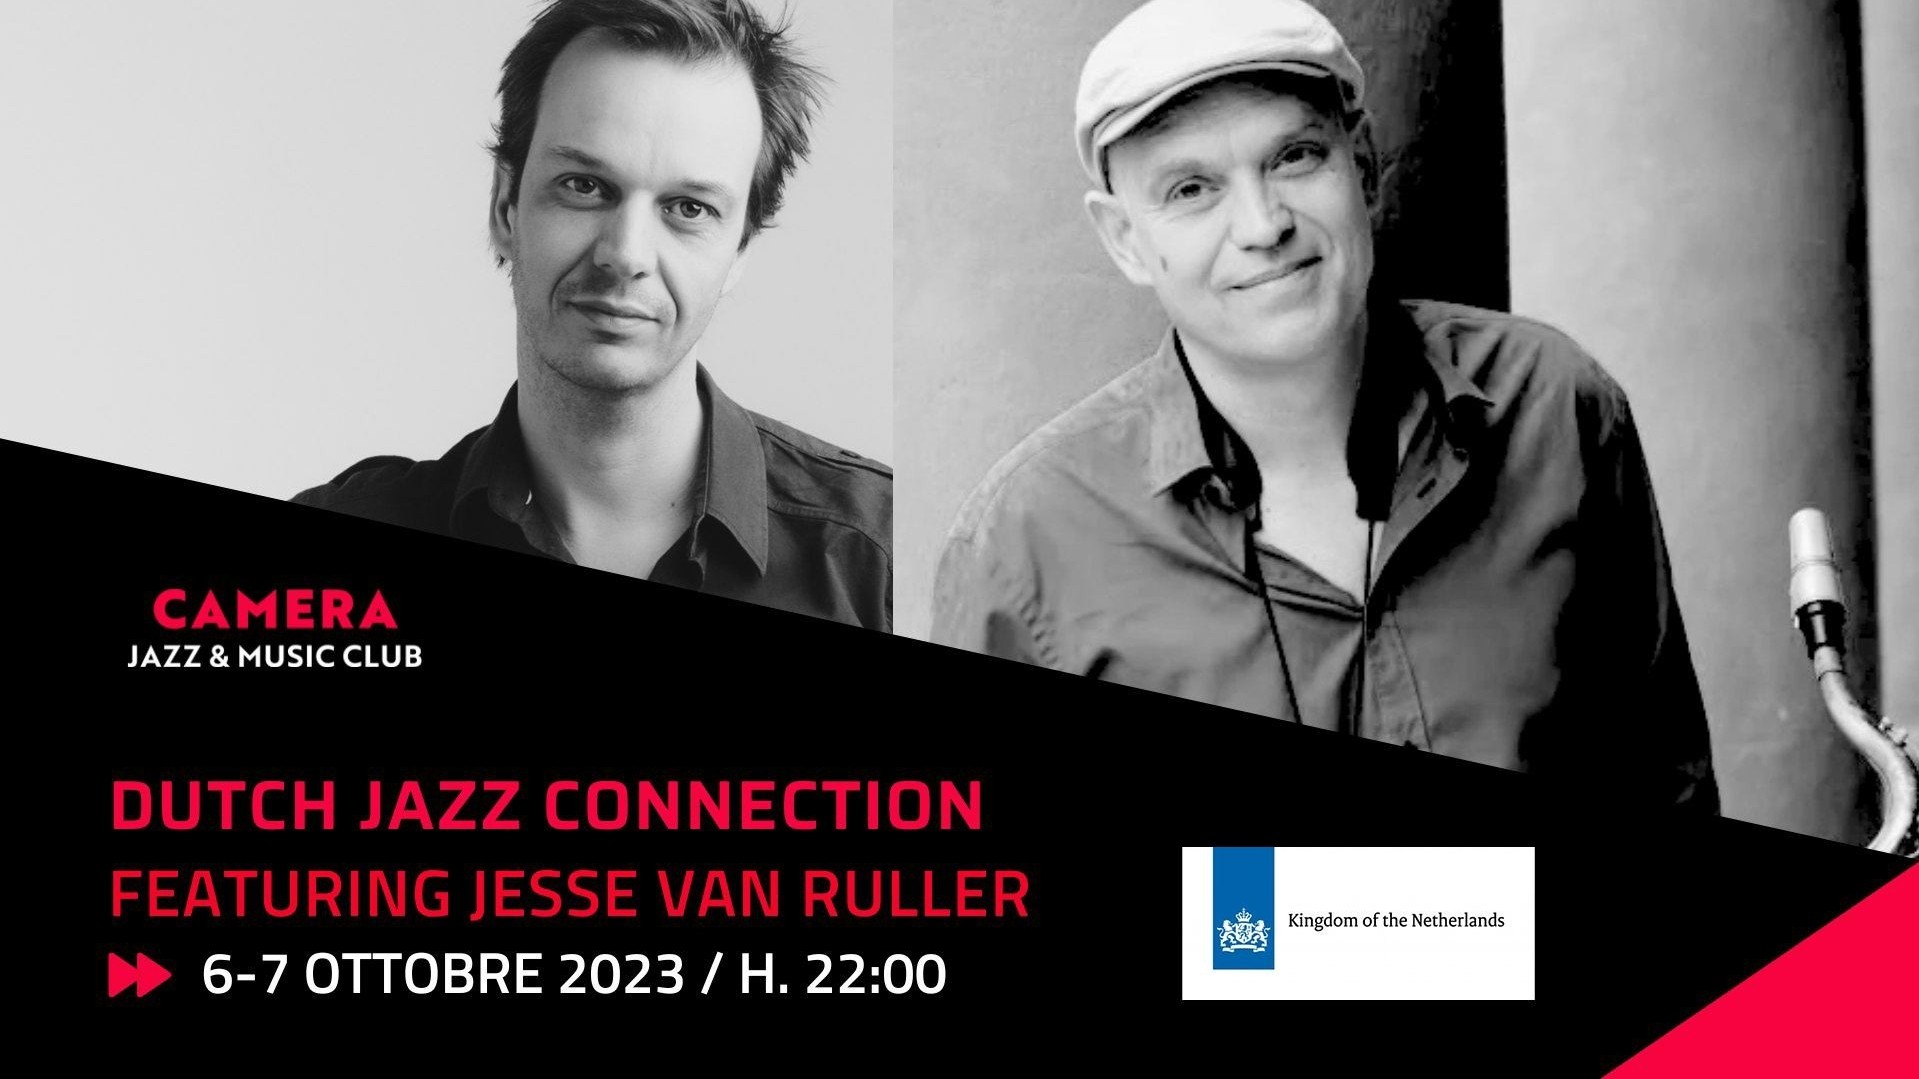 Dutch Jazz Connection “Featuring Jesse Van Ruller”